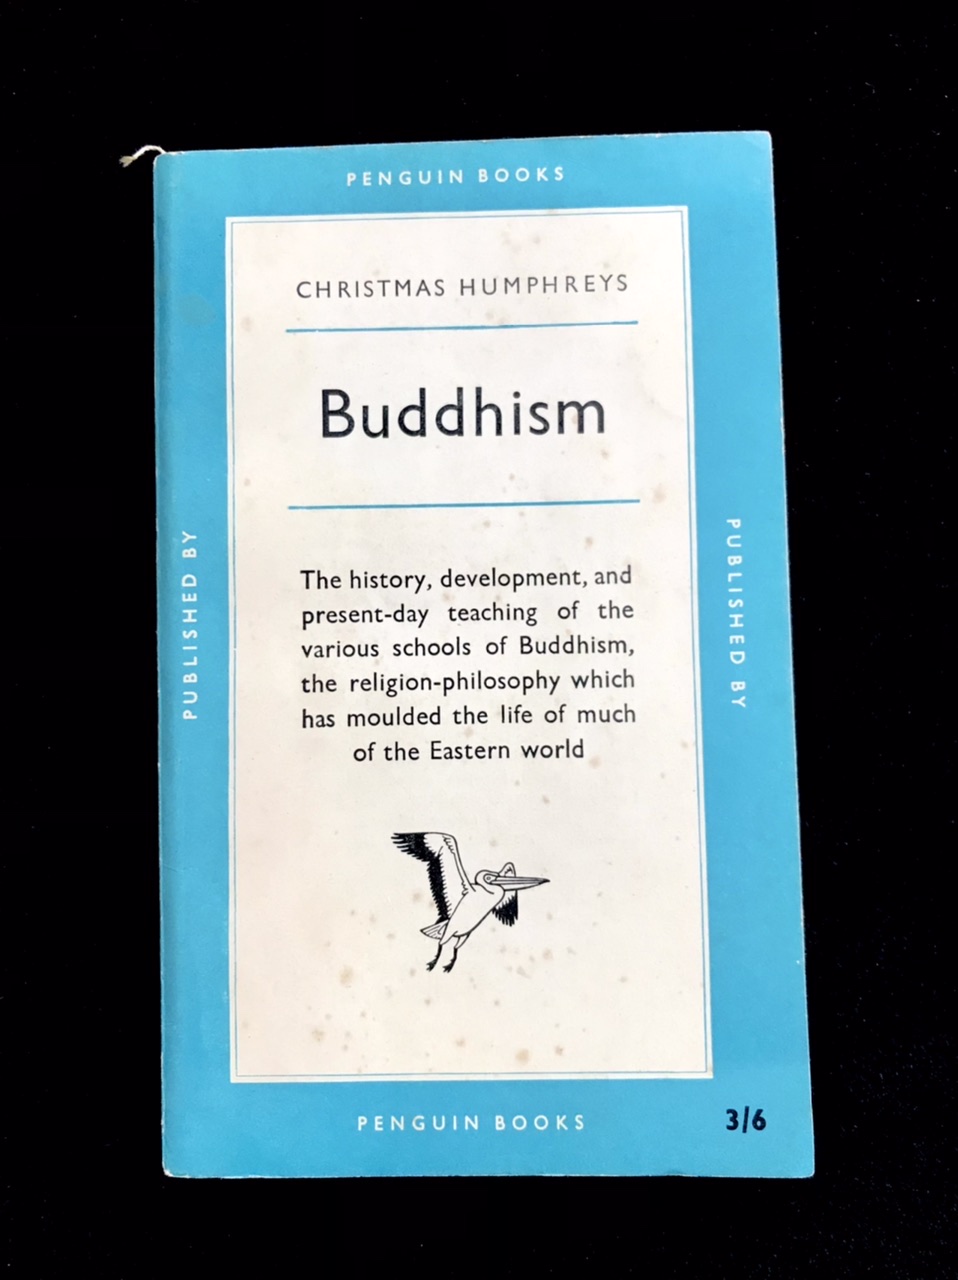 Buddhism by Christmas Humphreys